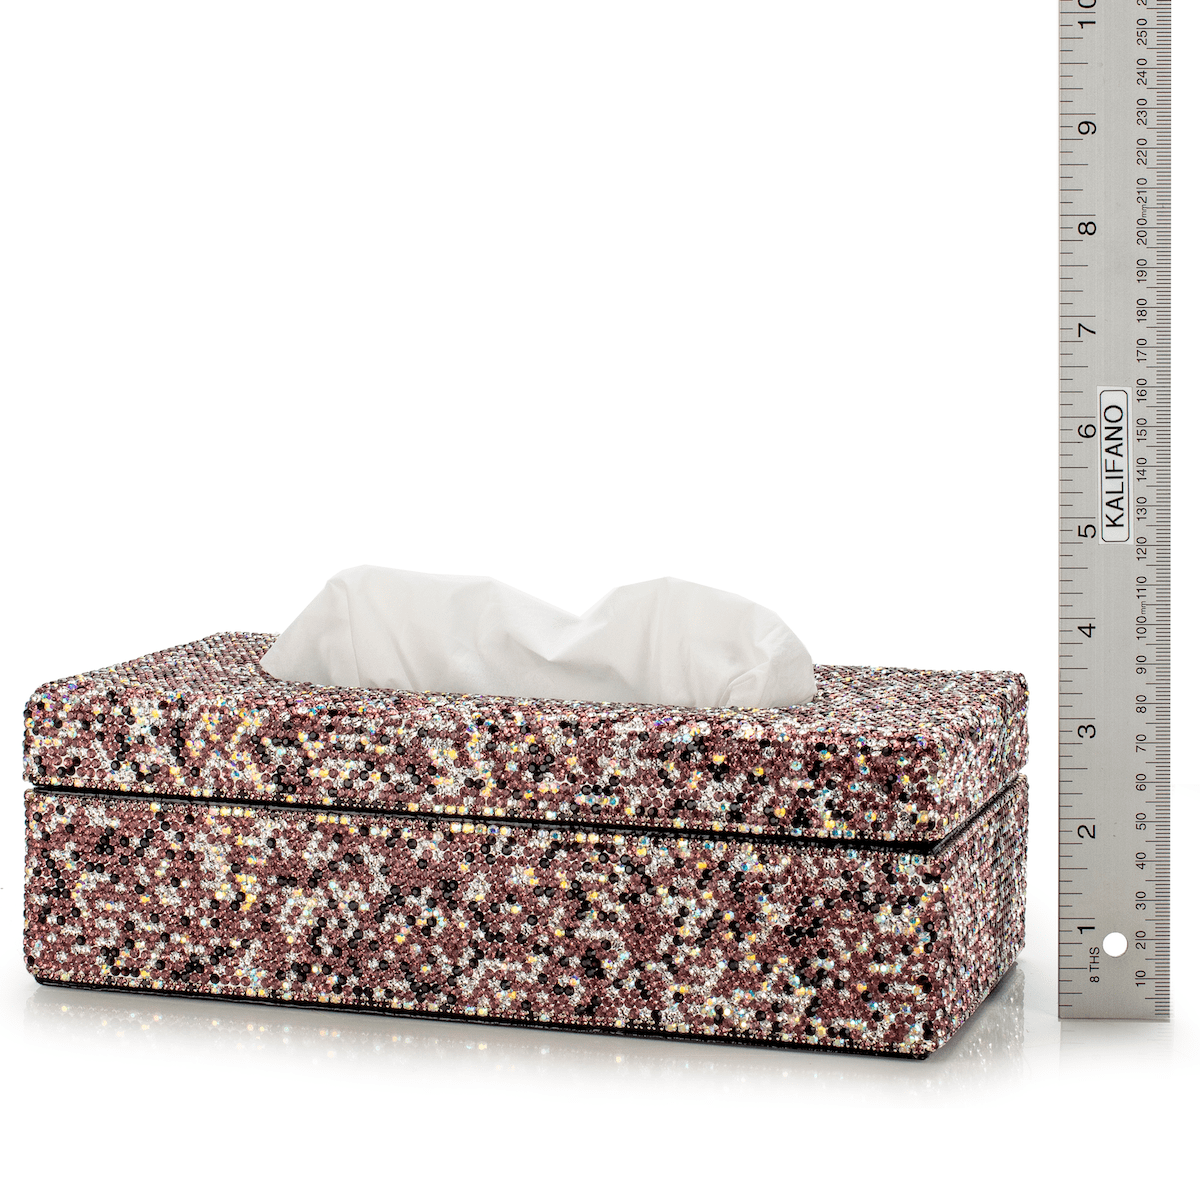 Kalifano Tissue Box STB300-PE - Tissue Box made w/ Crystals STB300-PE